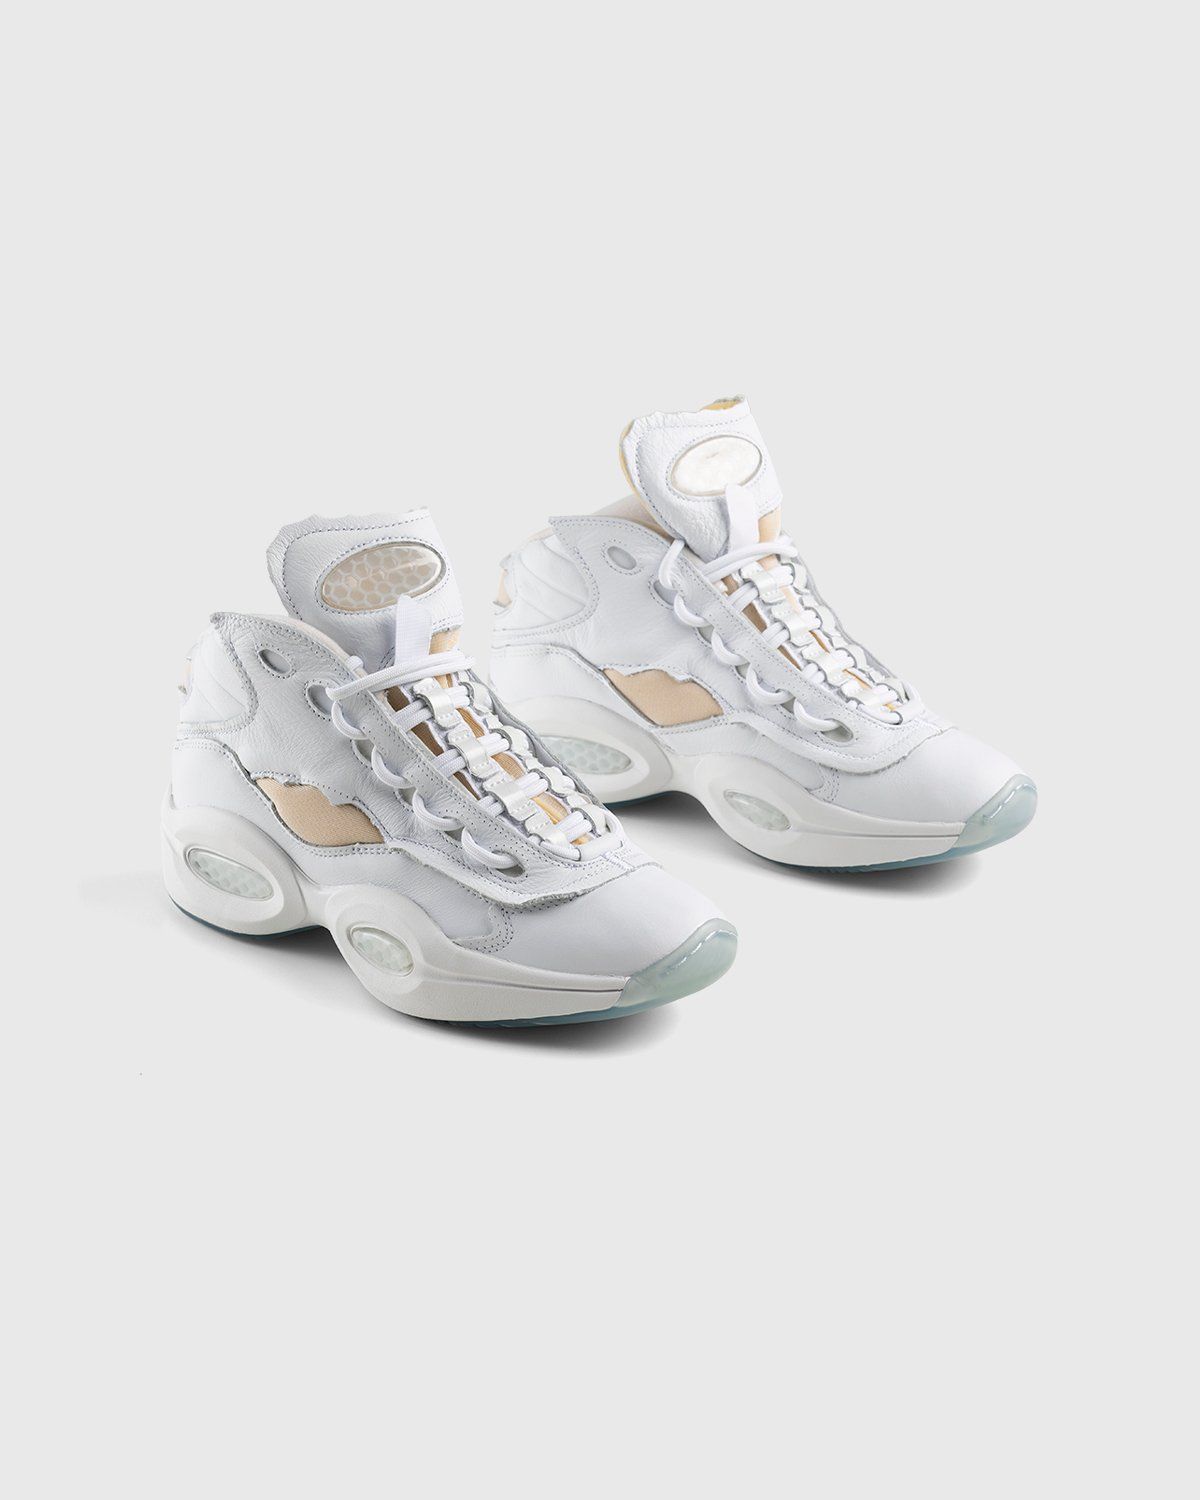 Reebok x Maison Margiela – Question Mid Memory Of White - Sneakers - White - Image 4